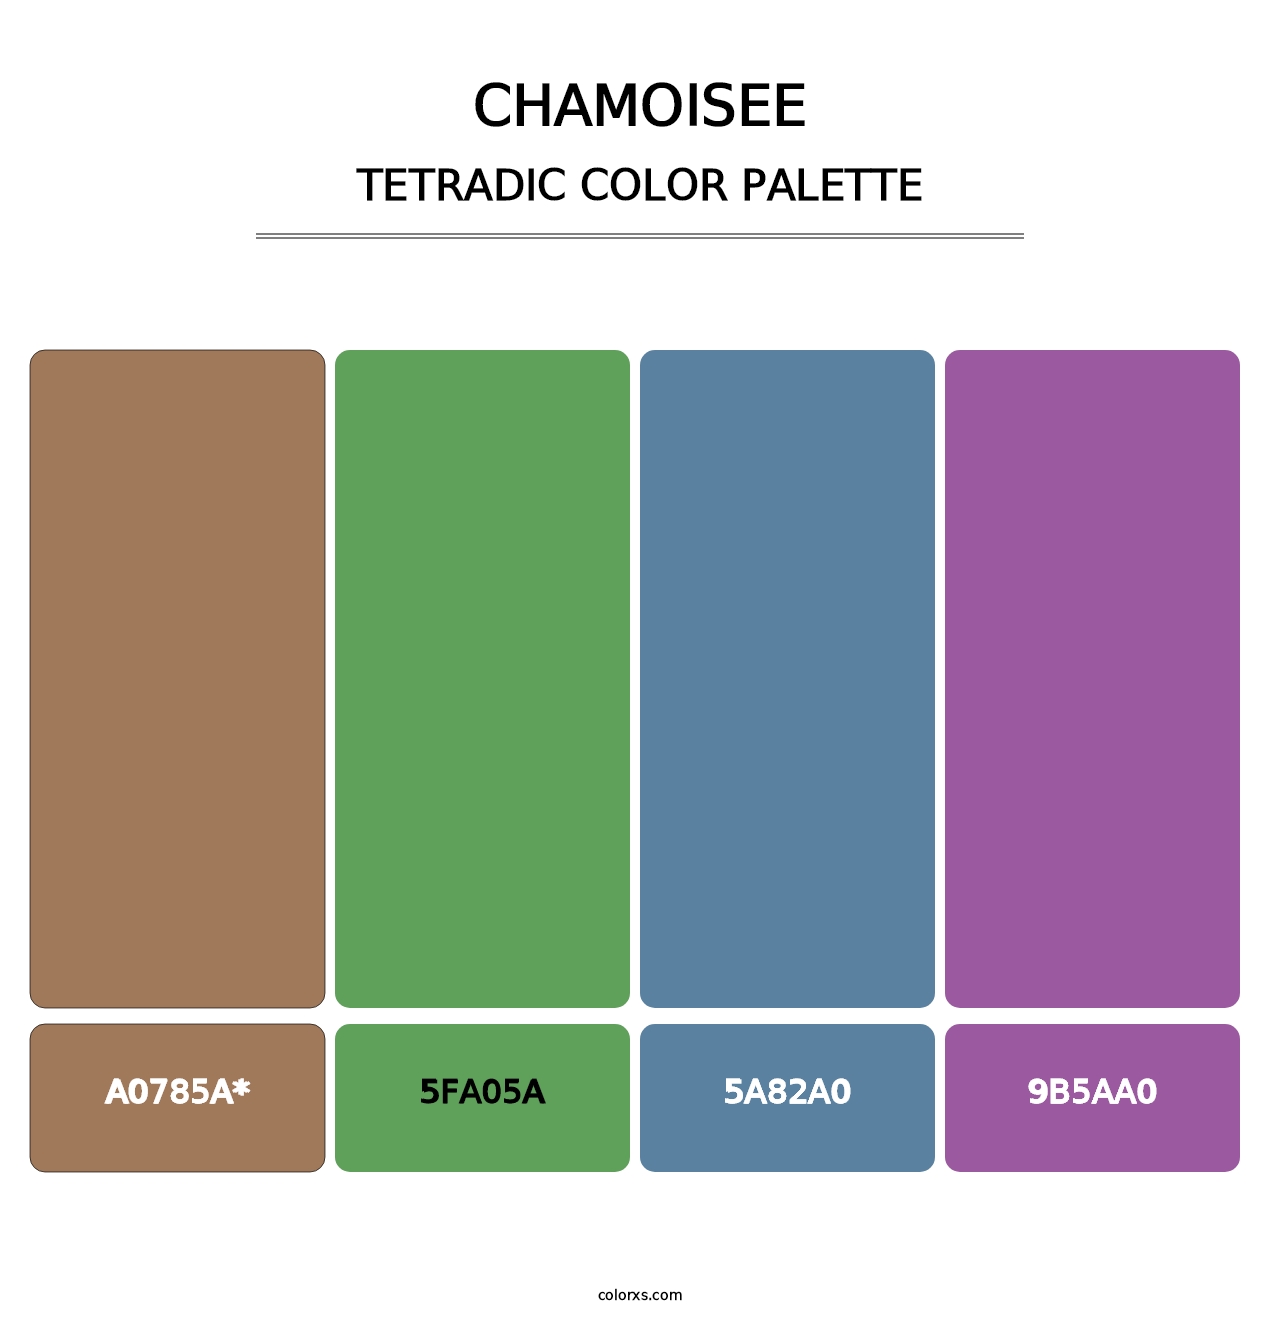 Chamoisee - Tetradic Color Palette